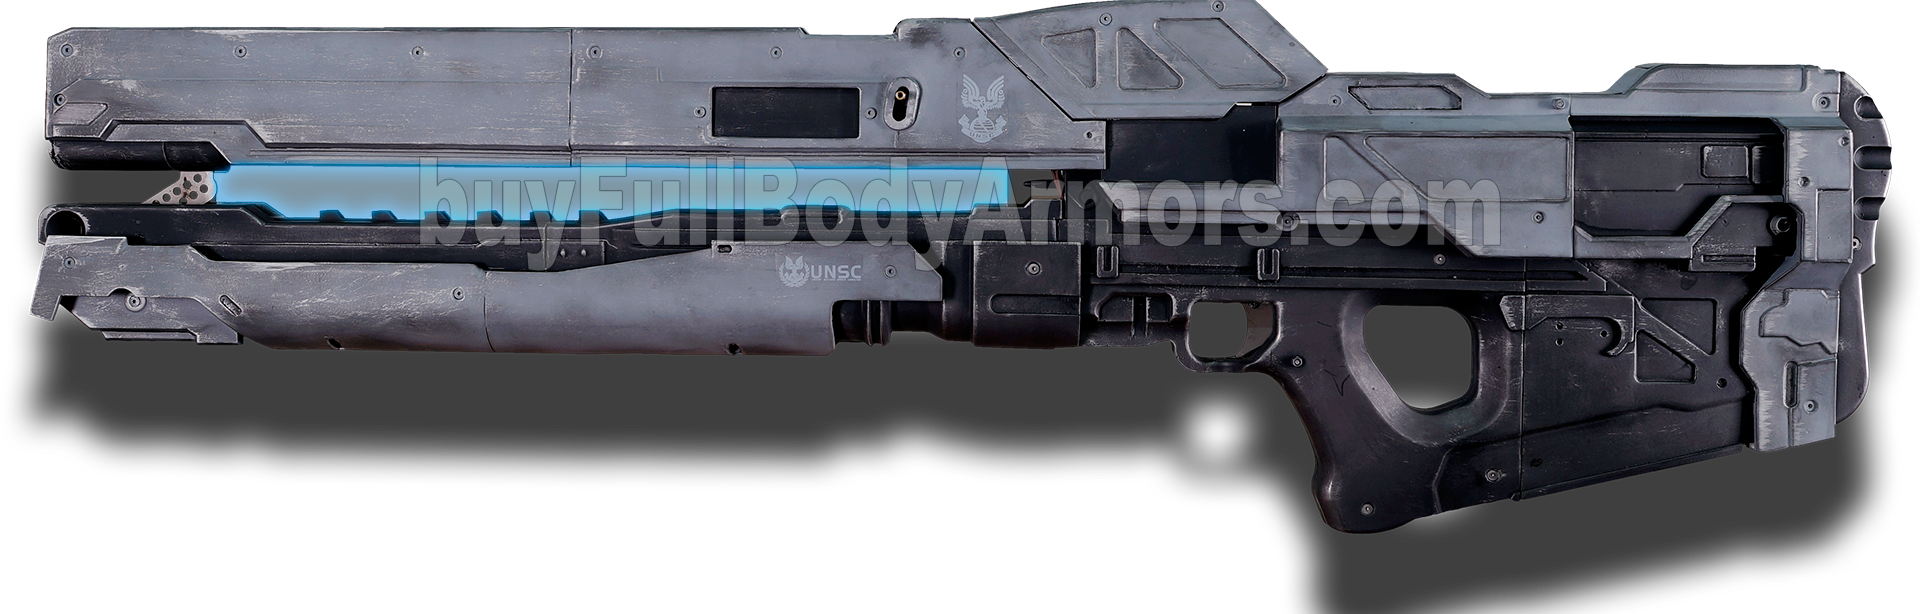 Halo Wars 2 Cosplay Weapon Arc920 Railgun - Airsoft Gun Clipart (1920x614), Png Download